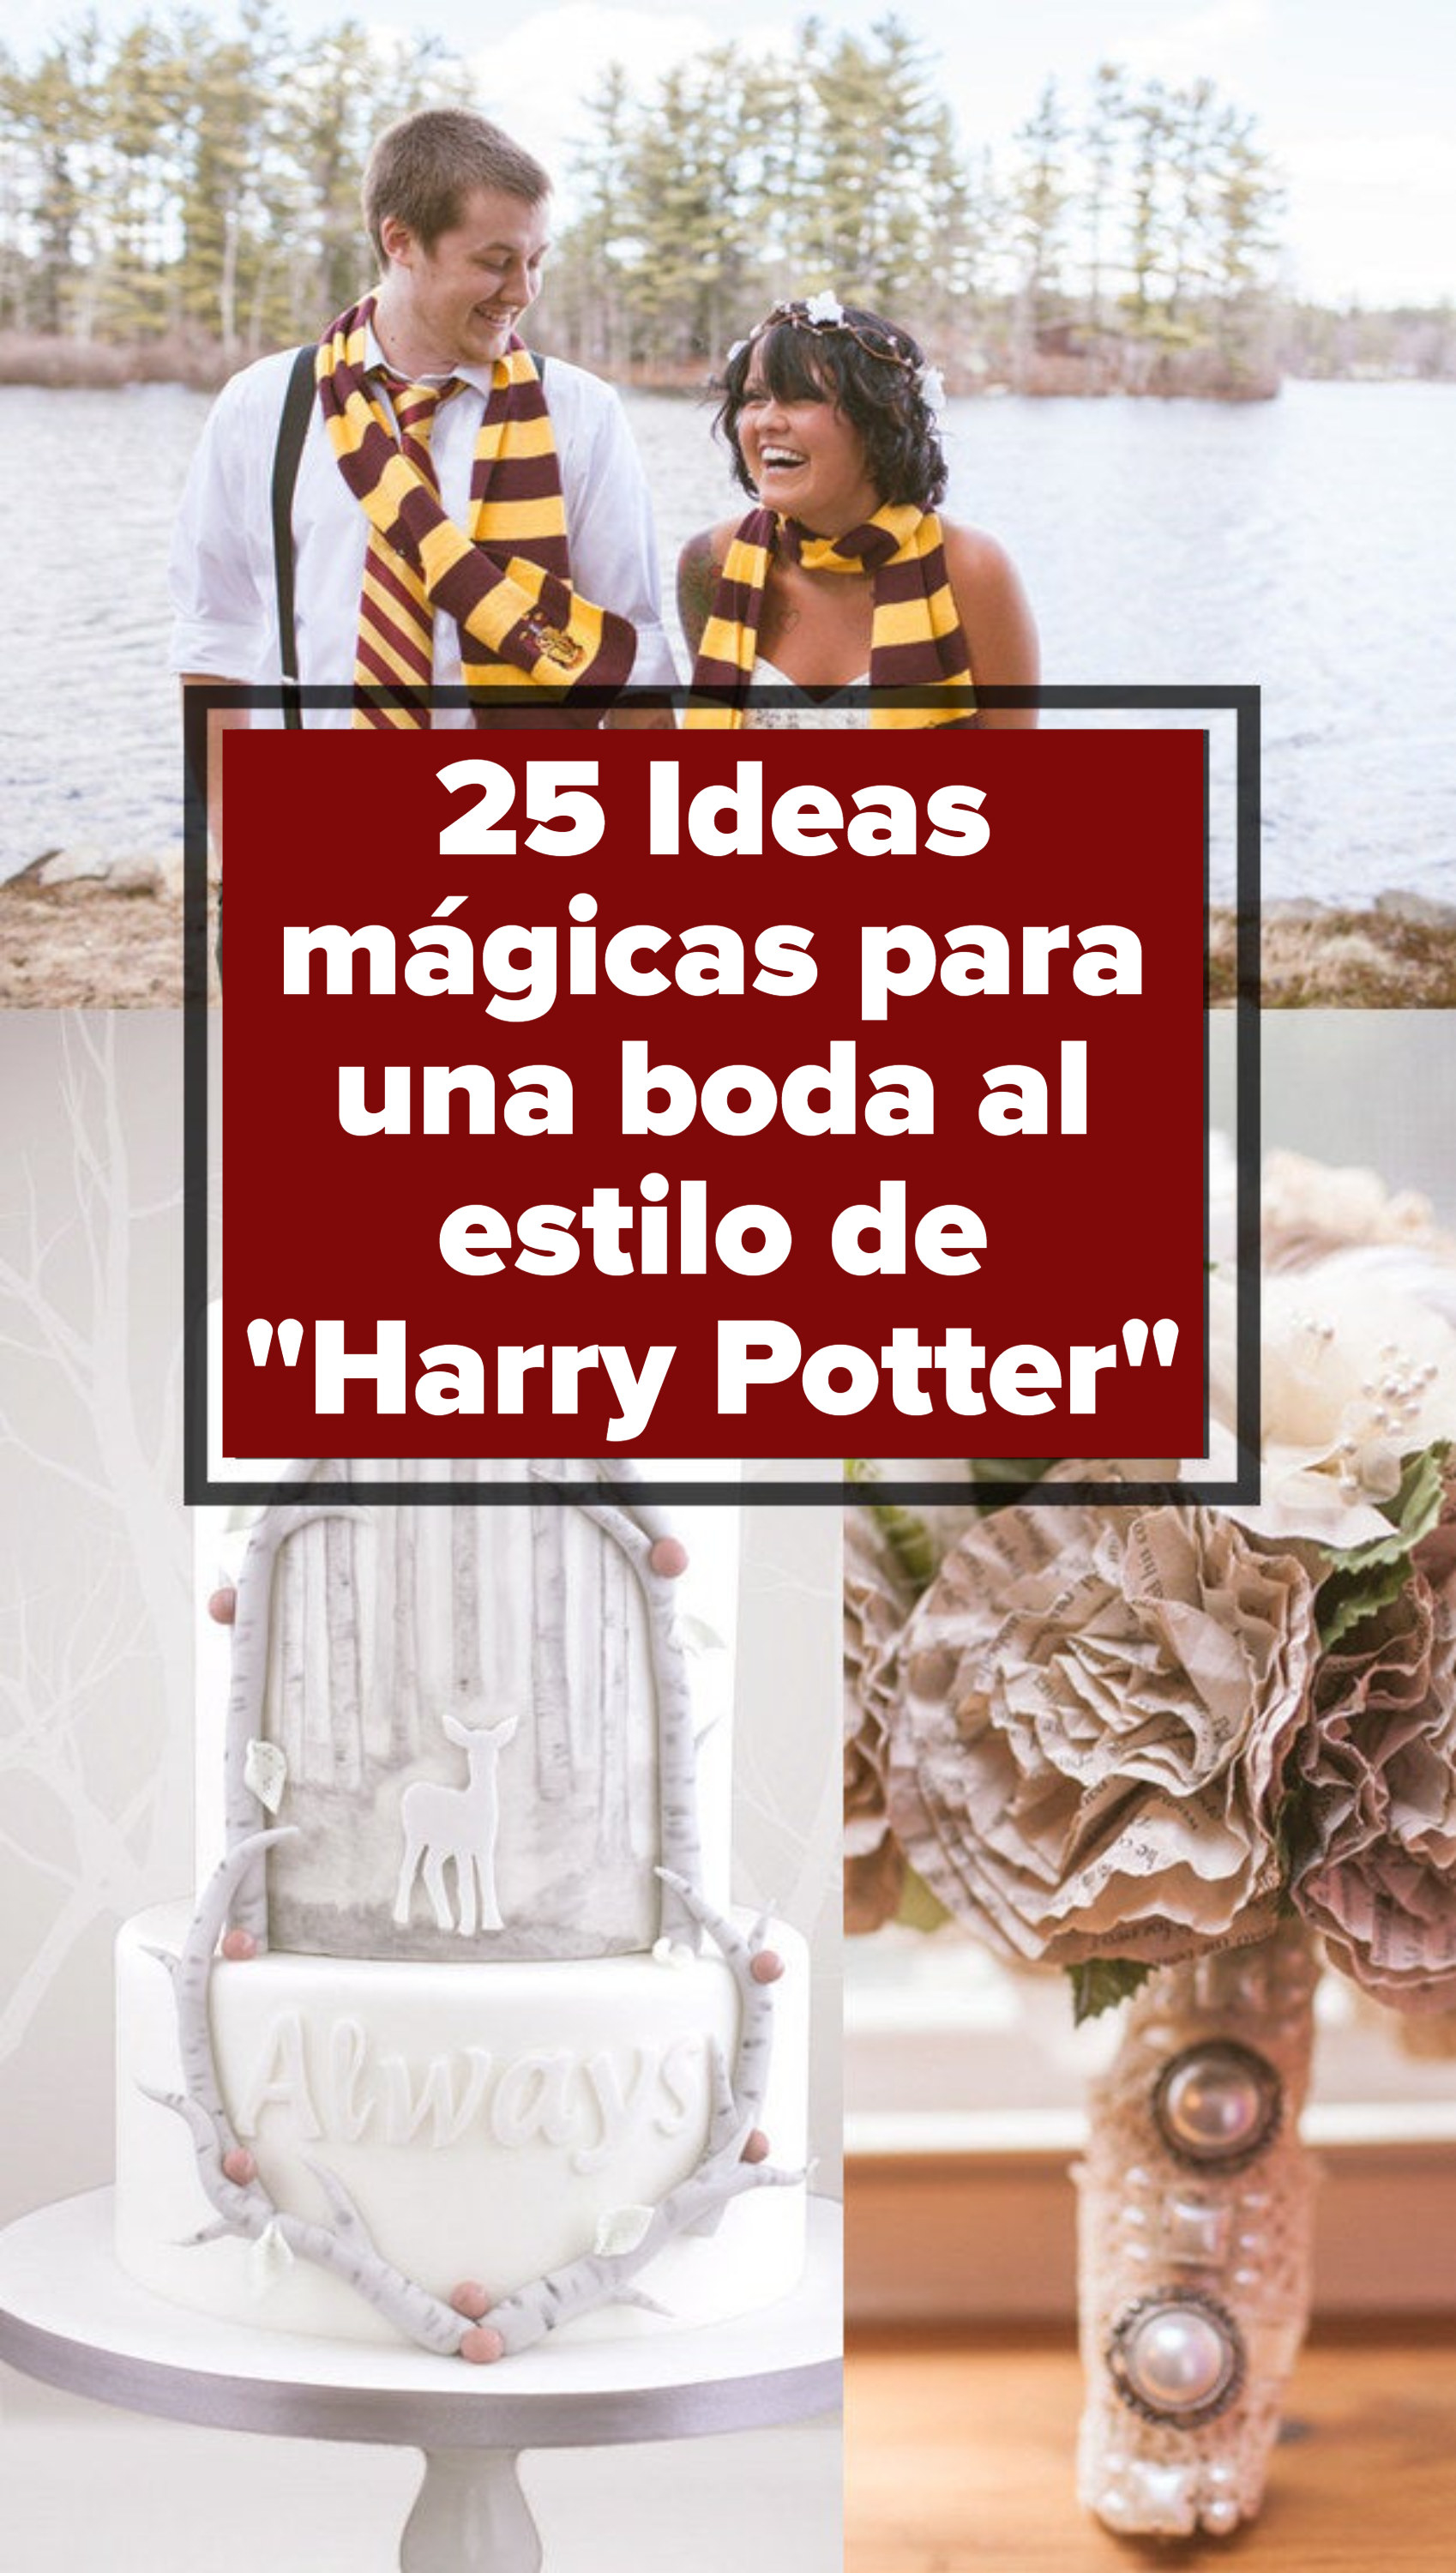 Matrimonio a tema Harry Potter elegante: basta la magia!